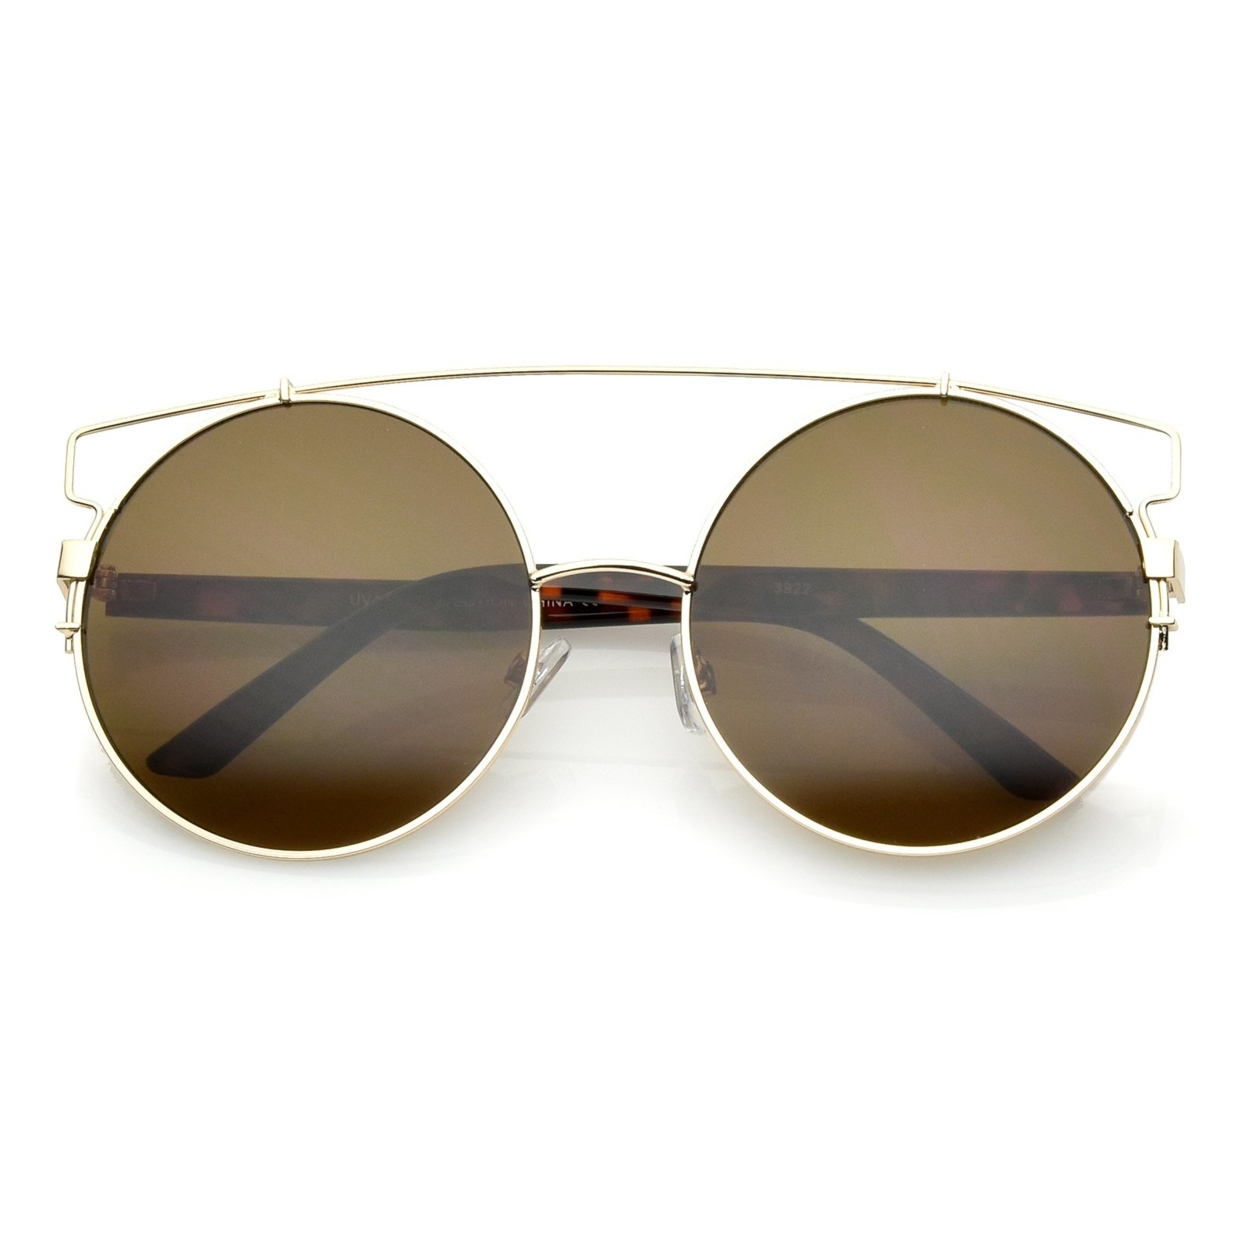 Oversize Open Metal Double Nose Bridge Round Flat Lens Aviator Sunglasses 53mm - Gold Tortoise / Green